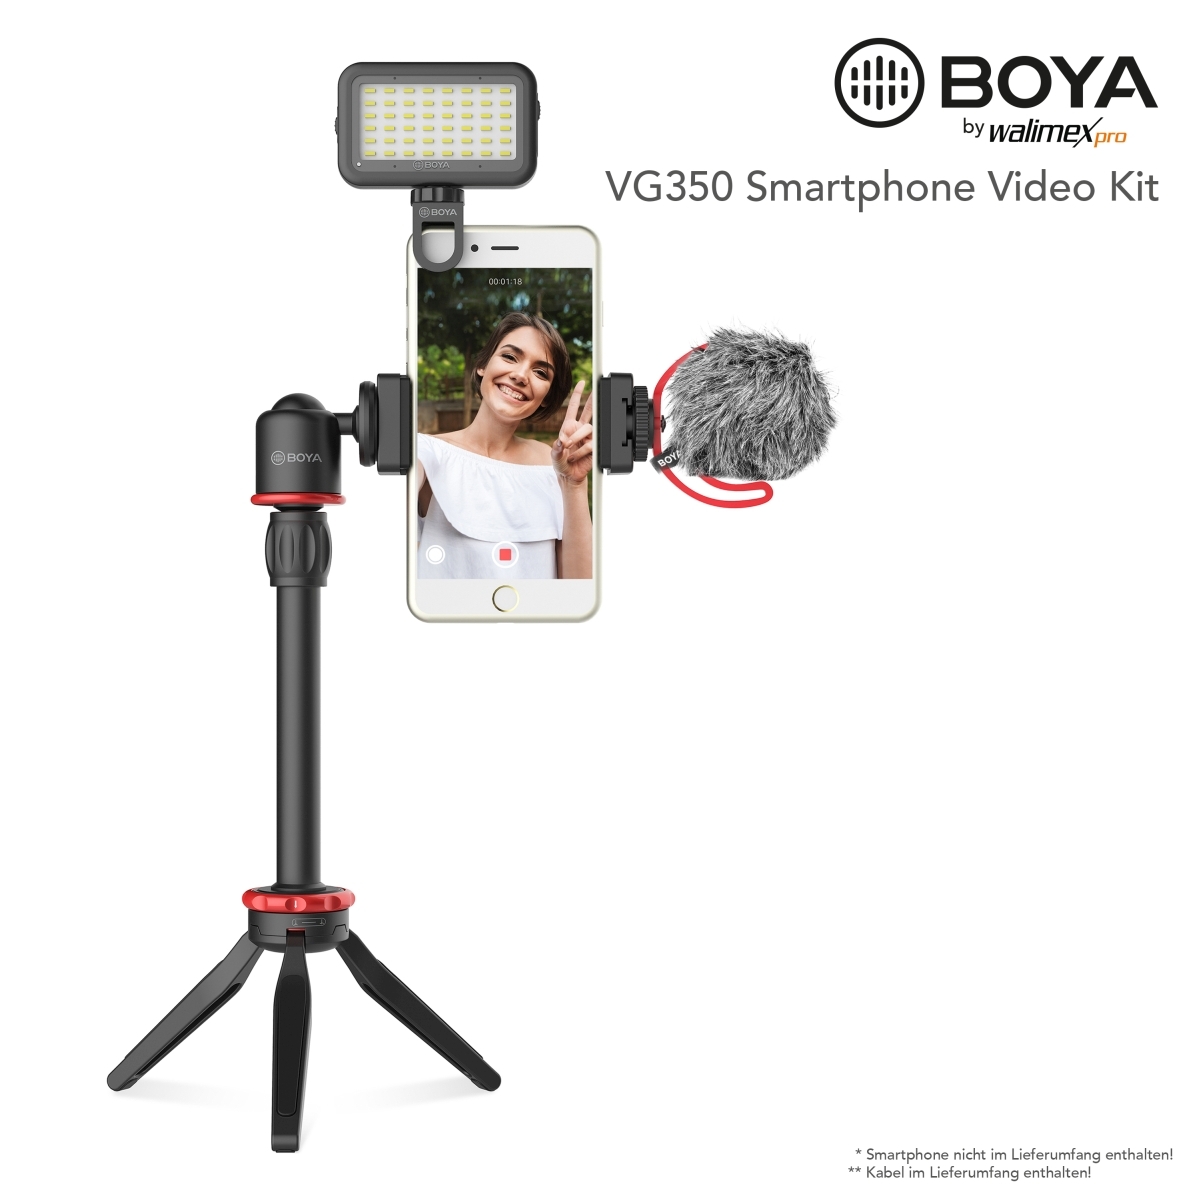 Walimex Pro Boya VG 350 Smartphone Video Kit